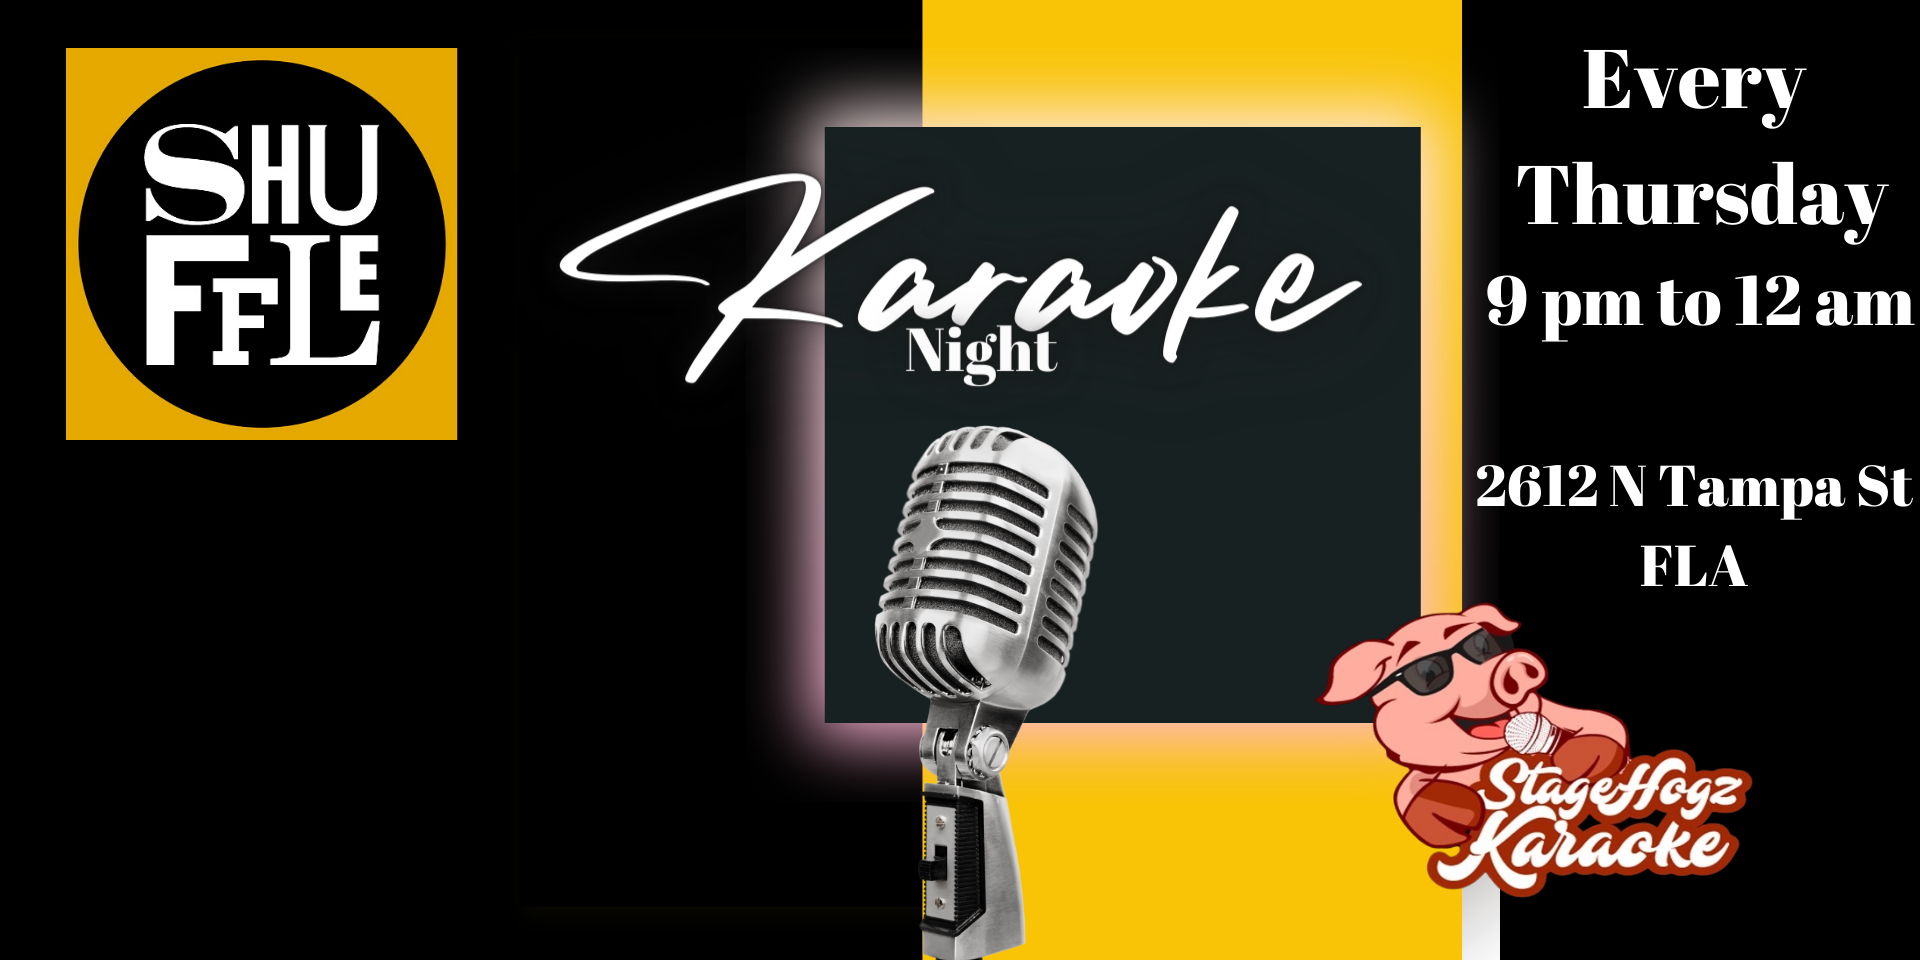 Karaoke Night at Shuffle promotional image